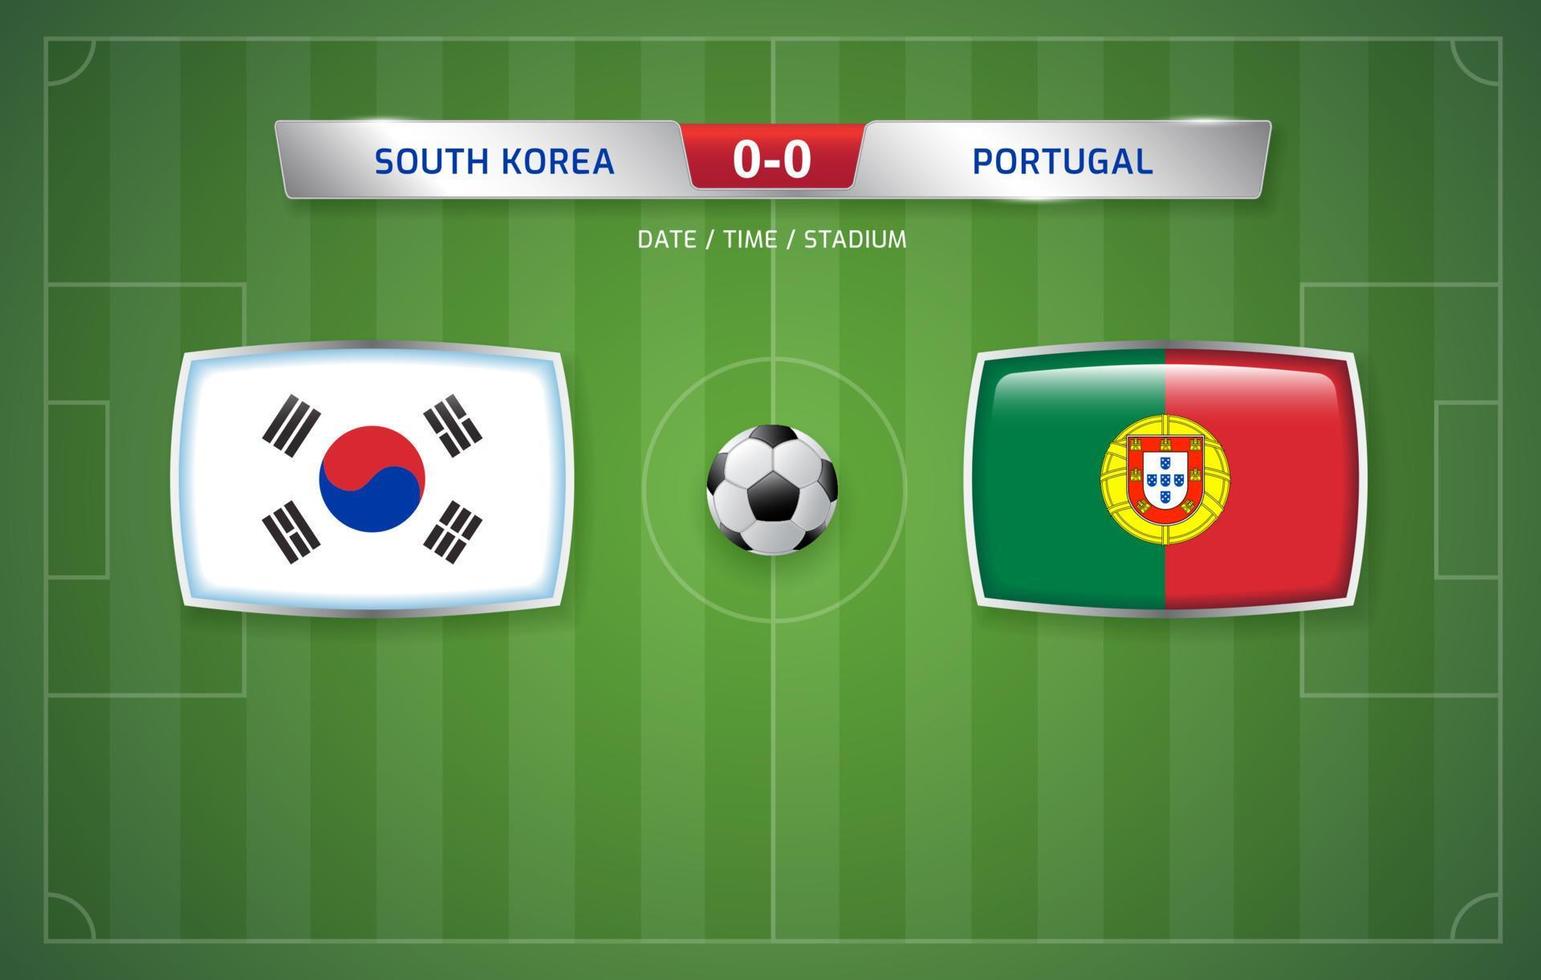 South korea vs Portugal scoreboard broadcast template for sport soccer tournament 2022 and football championship vector illustration